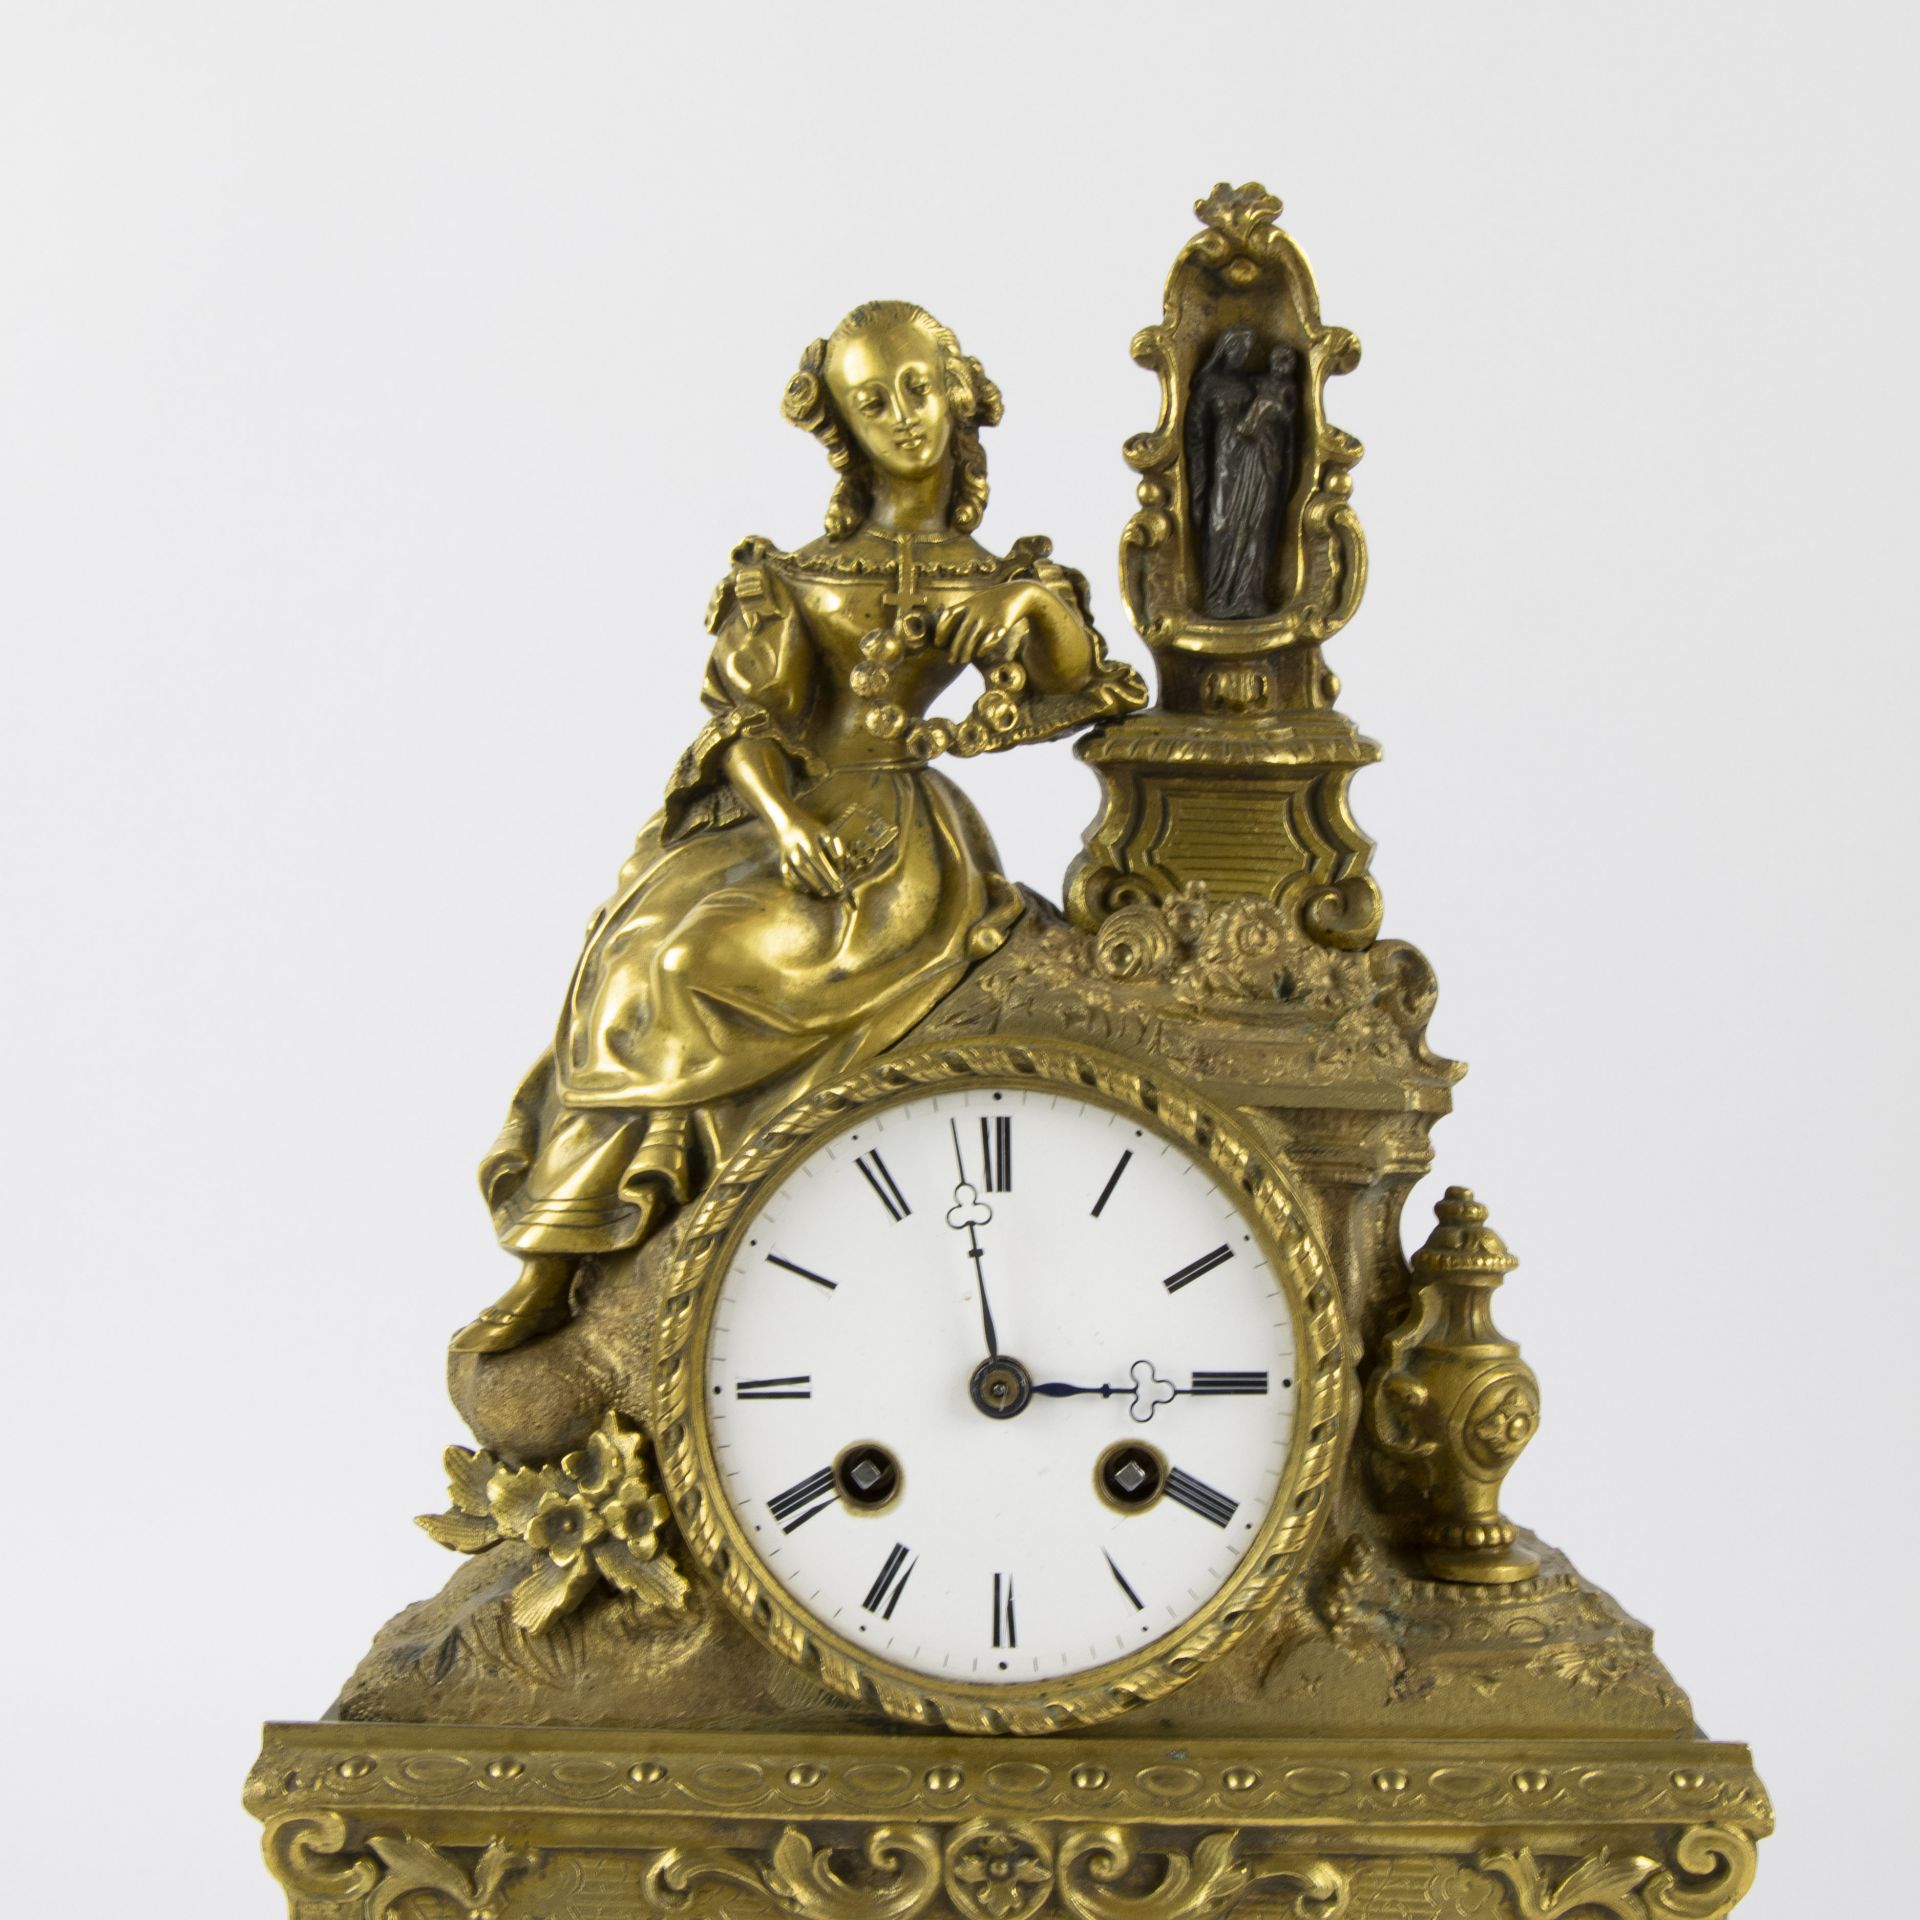 Bronze romantic mantel clock 19th century - Image 2 of 4